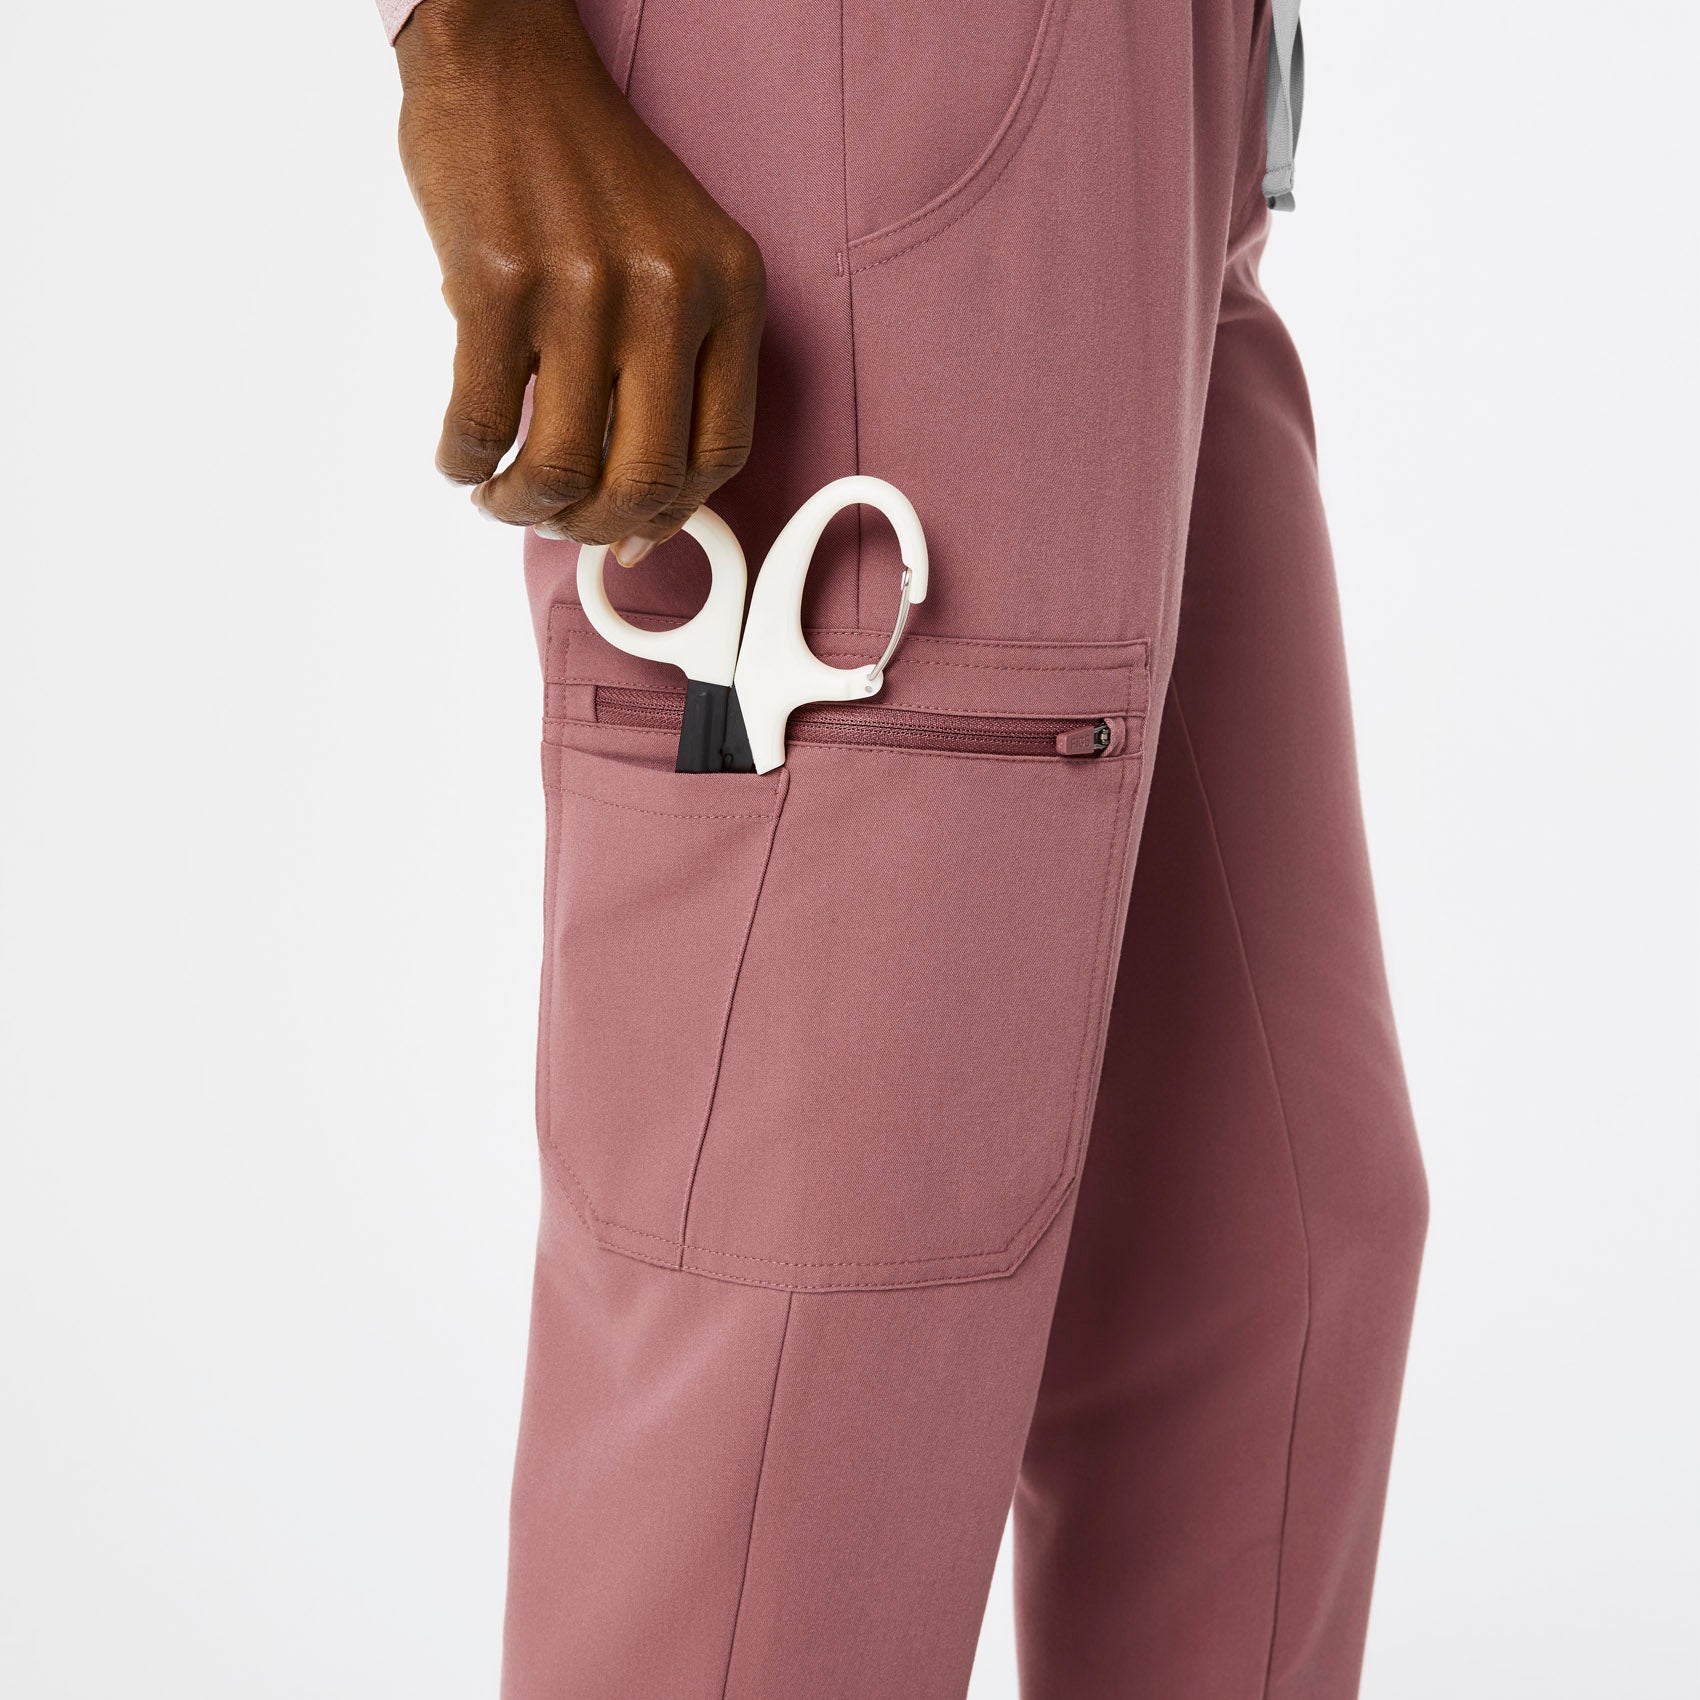 Pantalón deportivo de uniforme médico relajado Uman para mujer